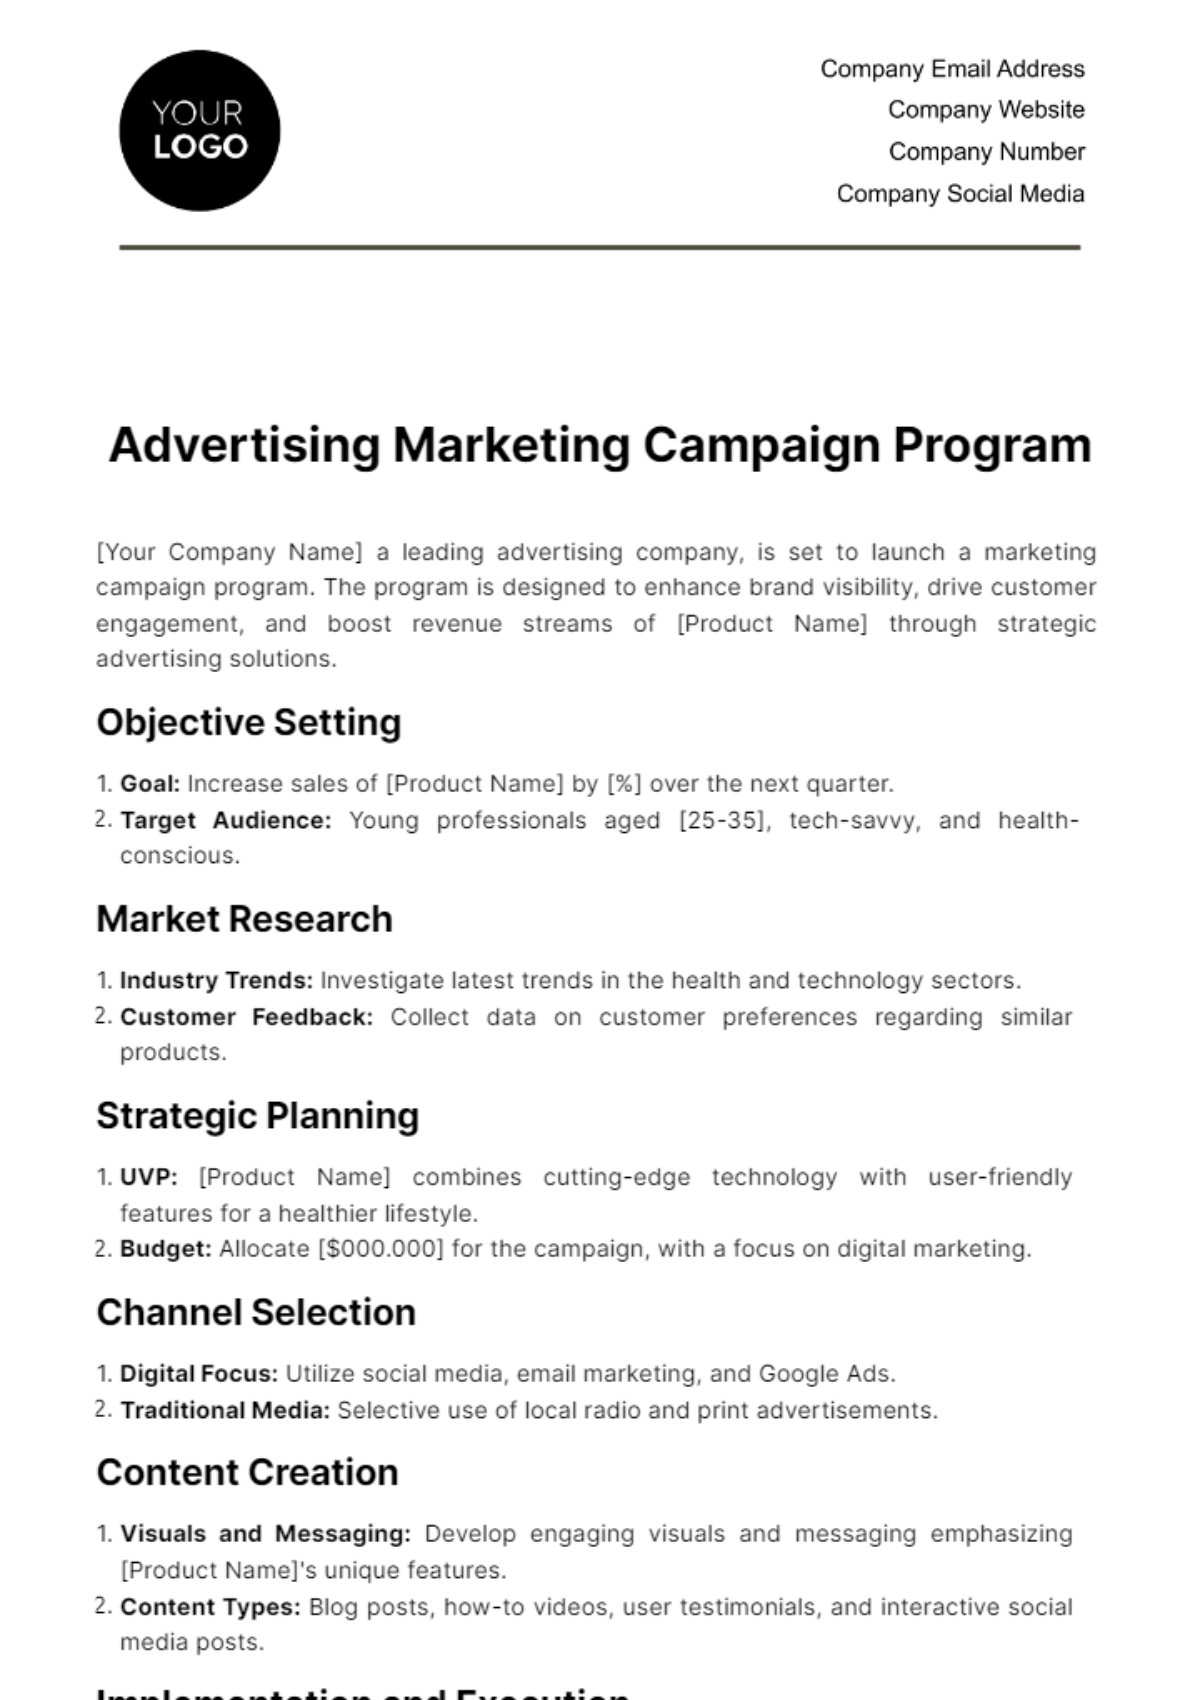 Advertising Marketing Campaign Program Template